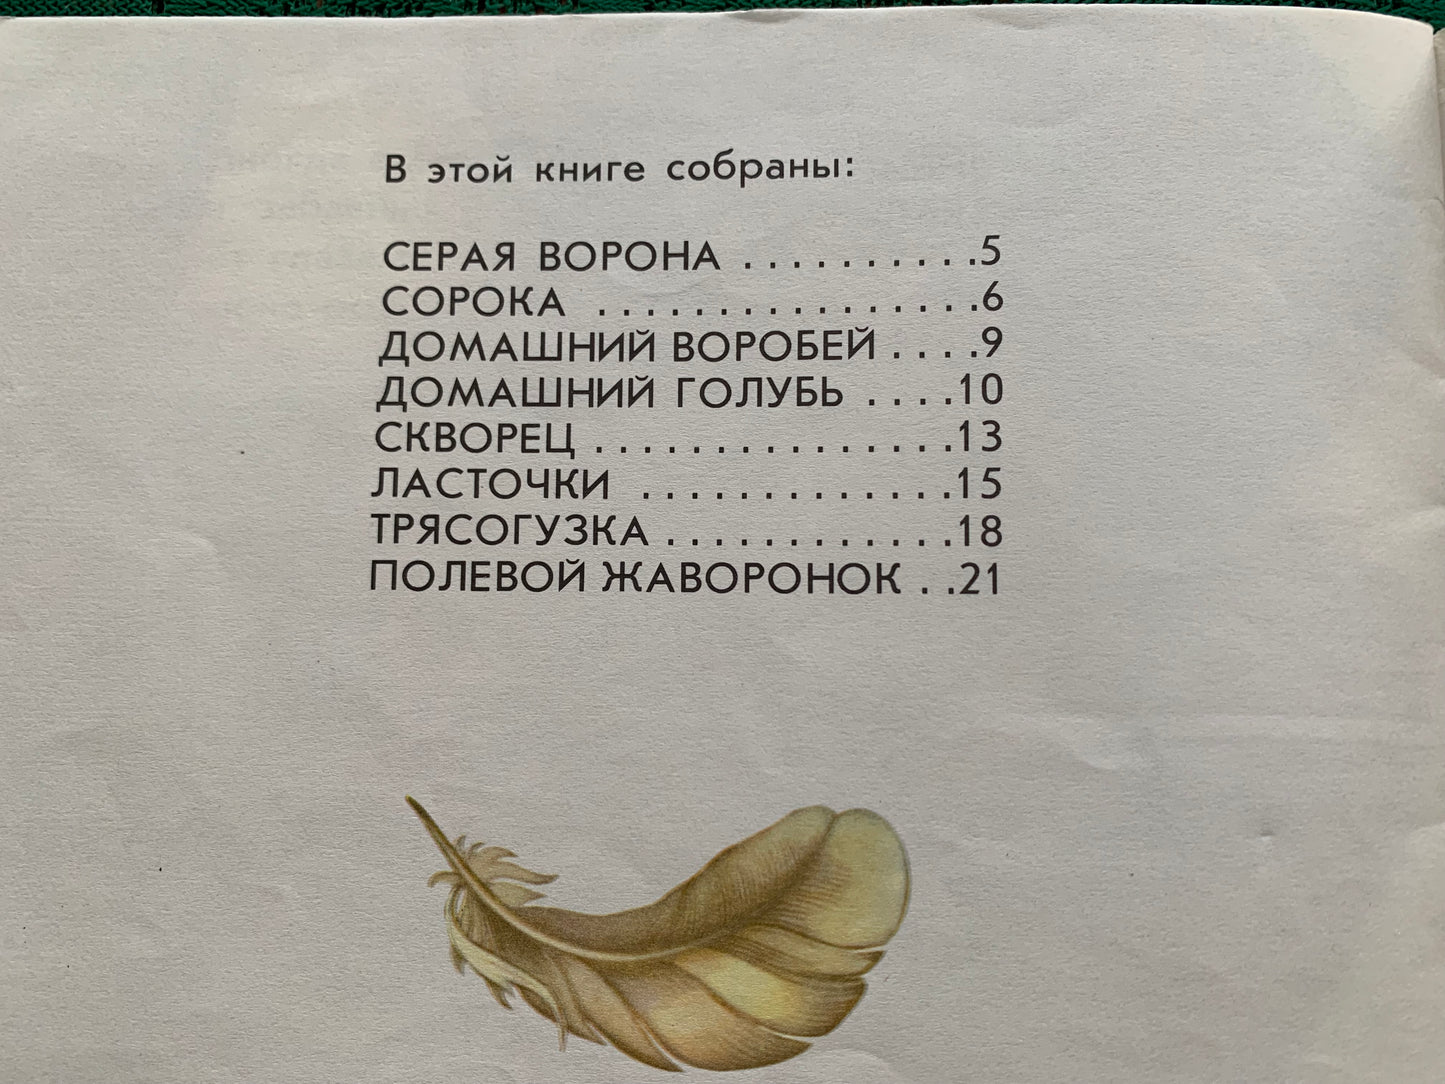 Vintage Estonian Children's Book in Russian - BIRDS - Rein Saluri - 1986